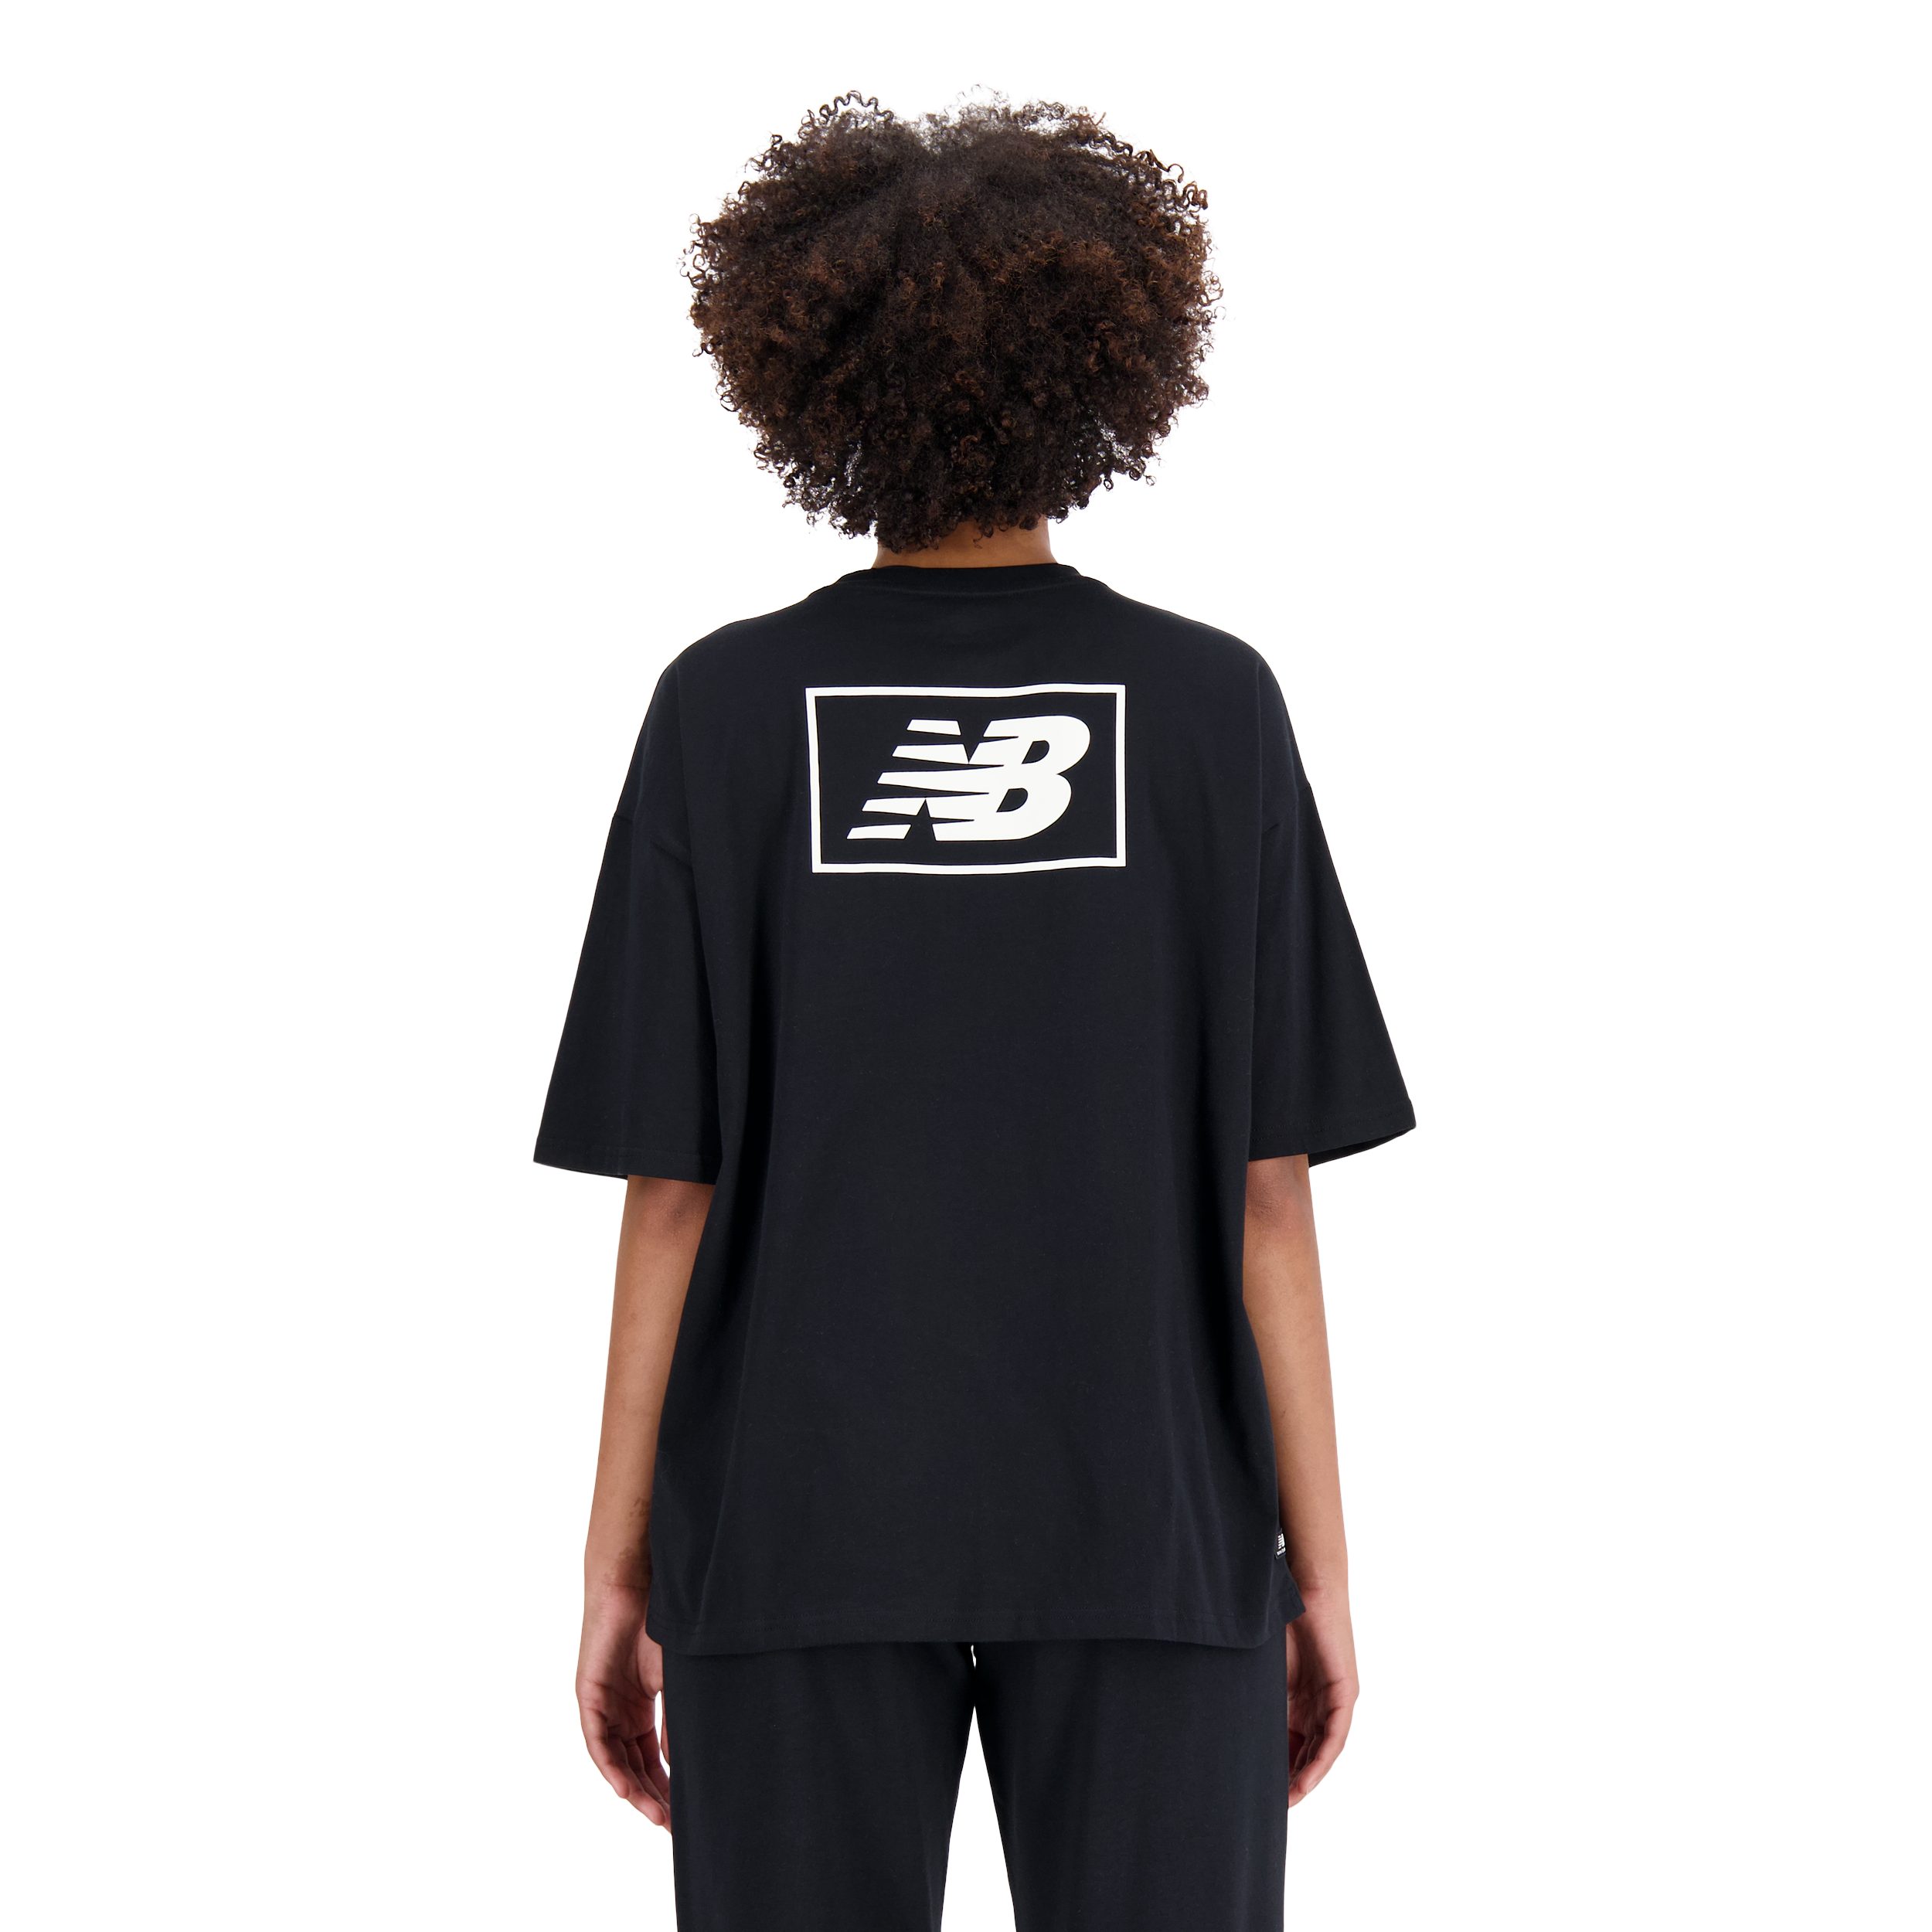 (001) T-Shirt black Balance New